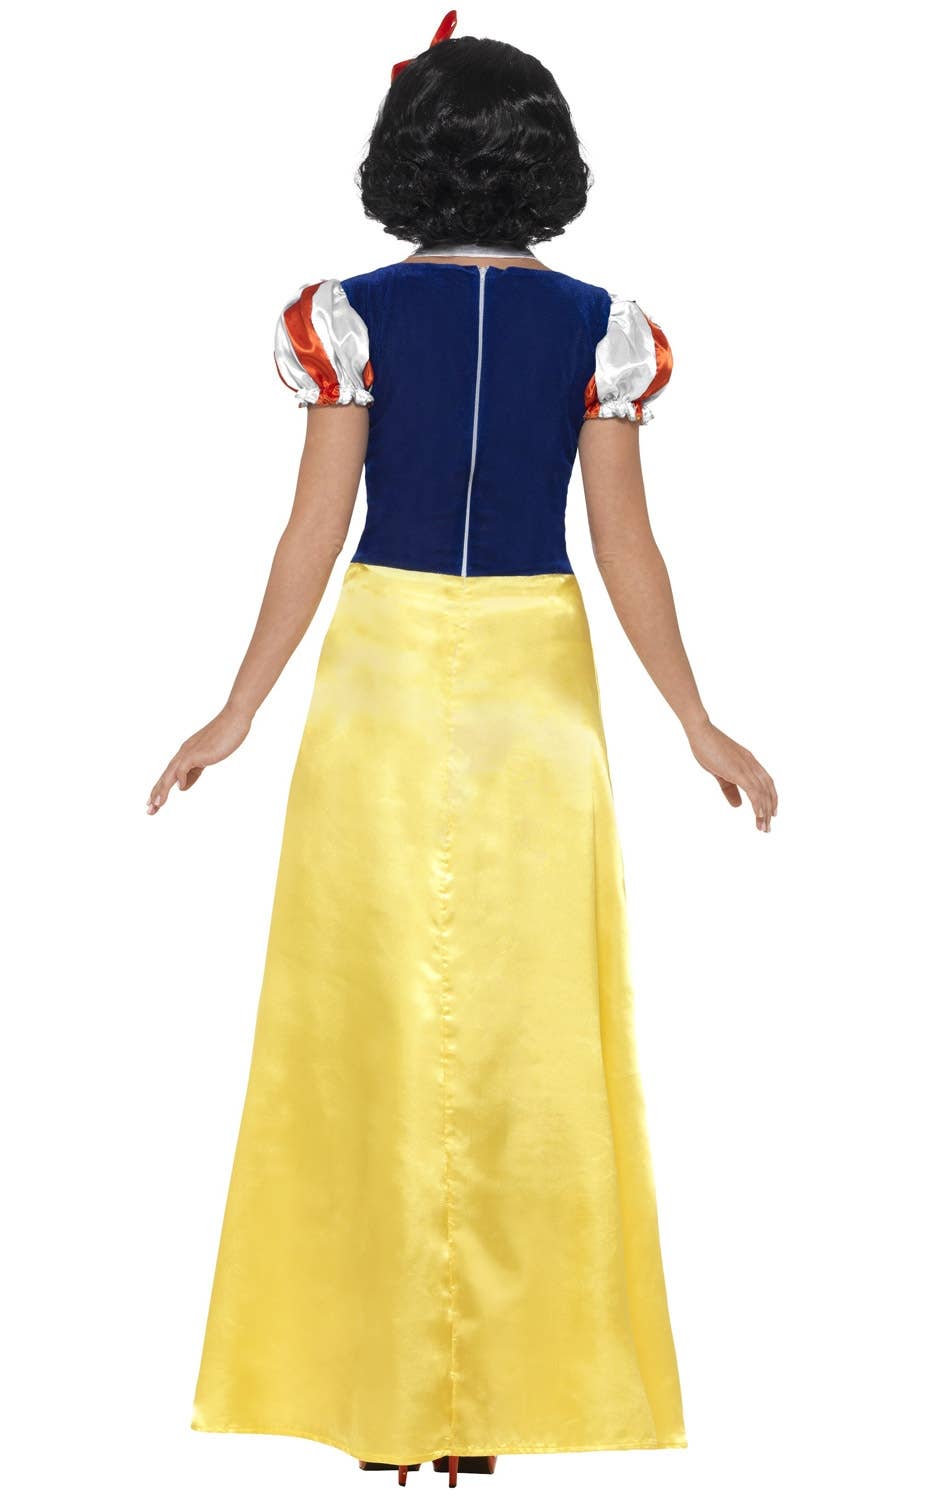 Women's Fairytale Snow White Fancy Dress Costume Back View